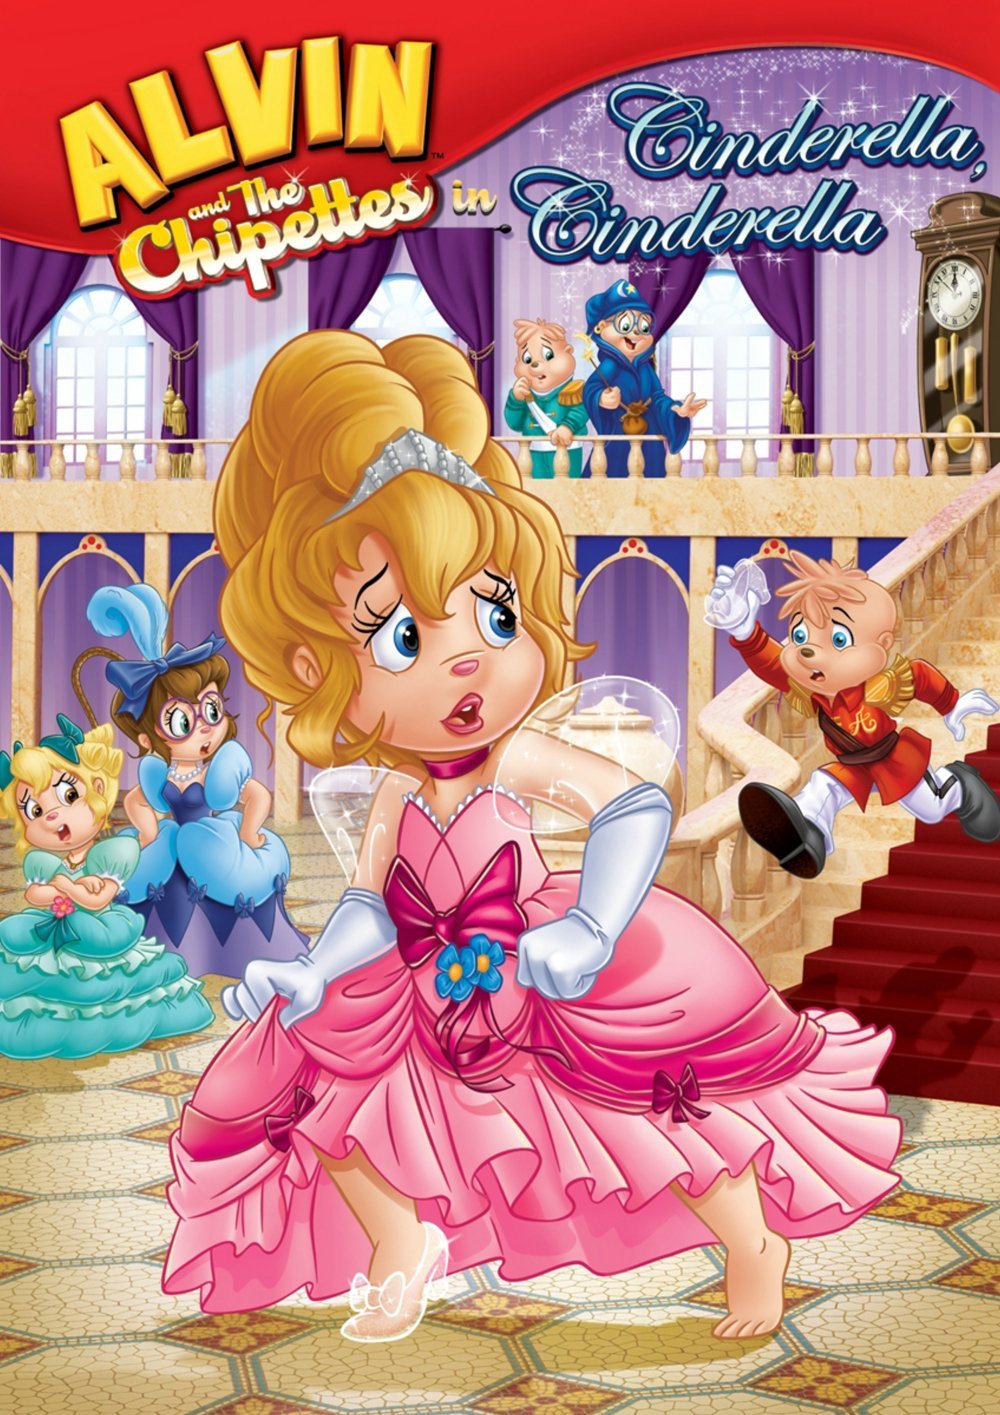 Alvin and the Chipettes in Cinderella, Cinderella (DVD) .